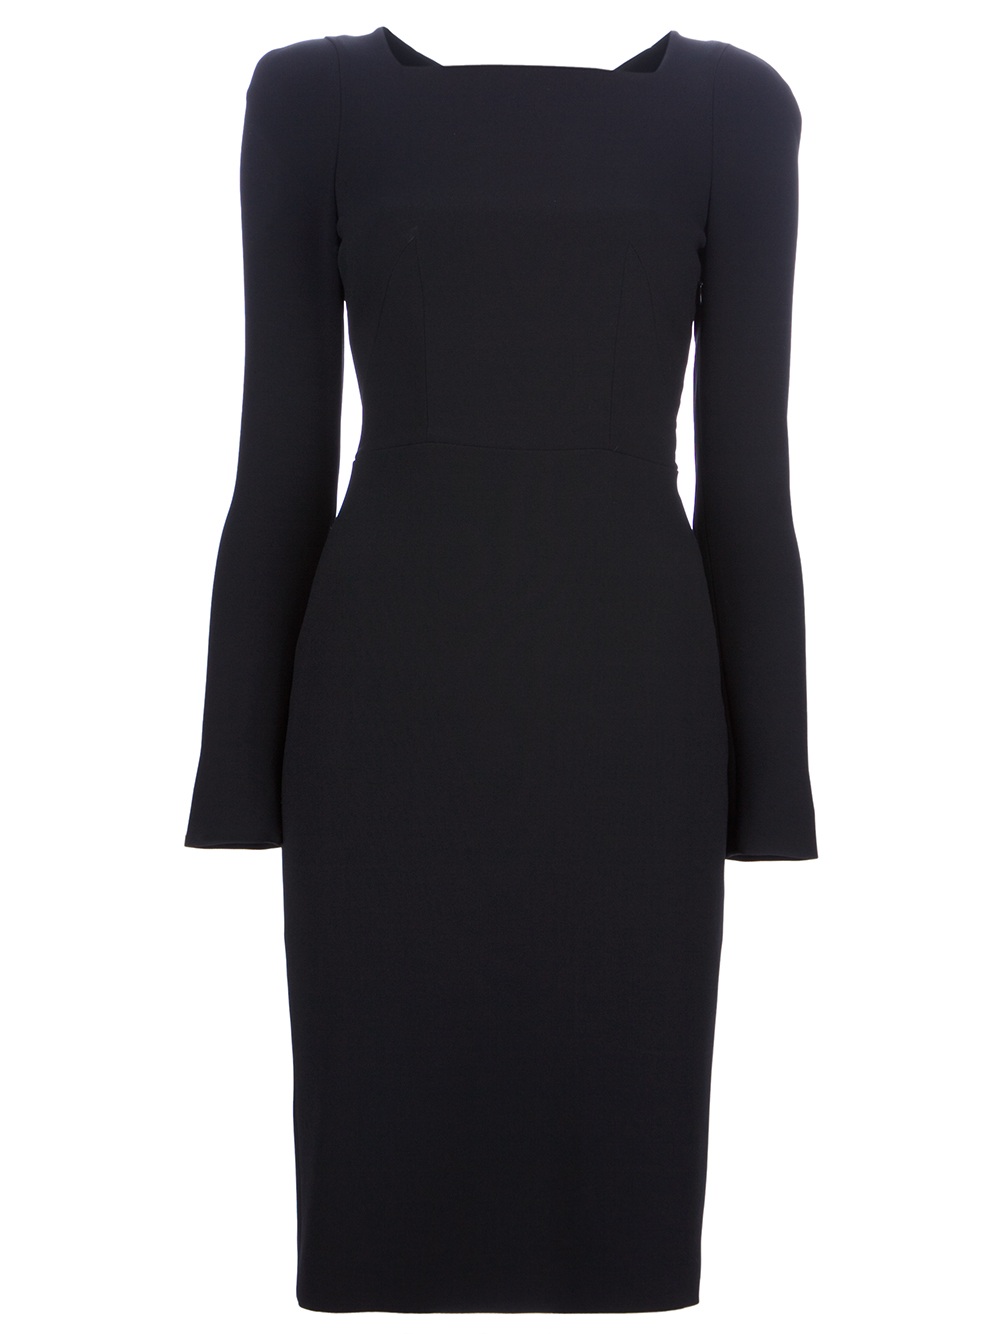 Tom Ford Cutout Dress in Black | Lyst